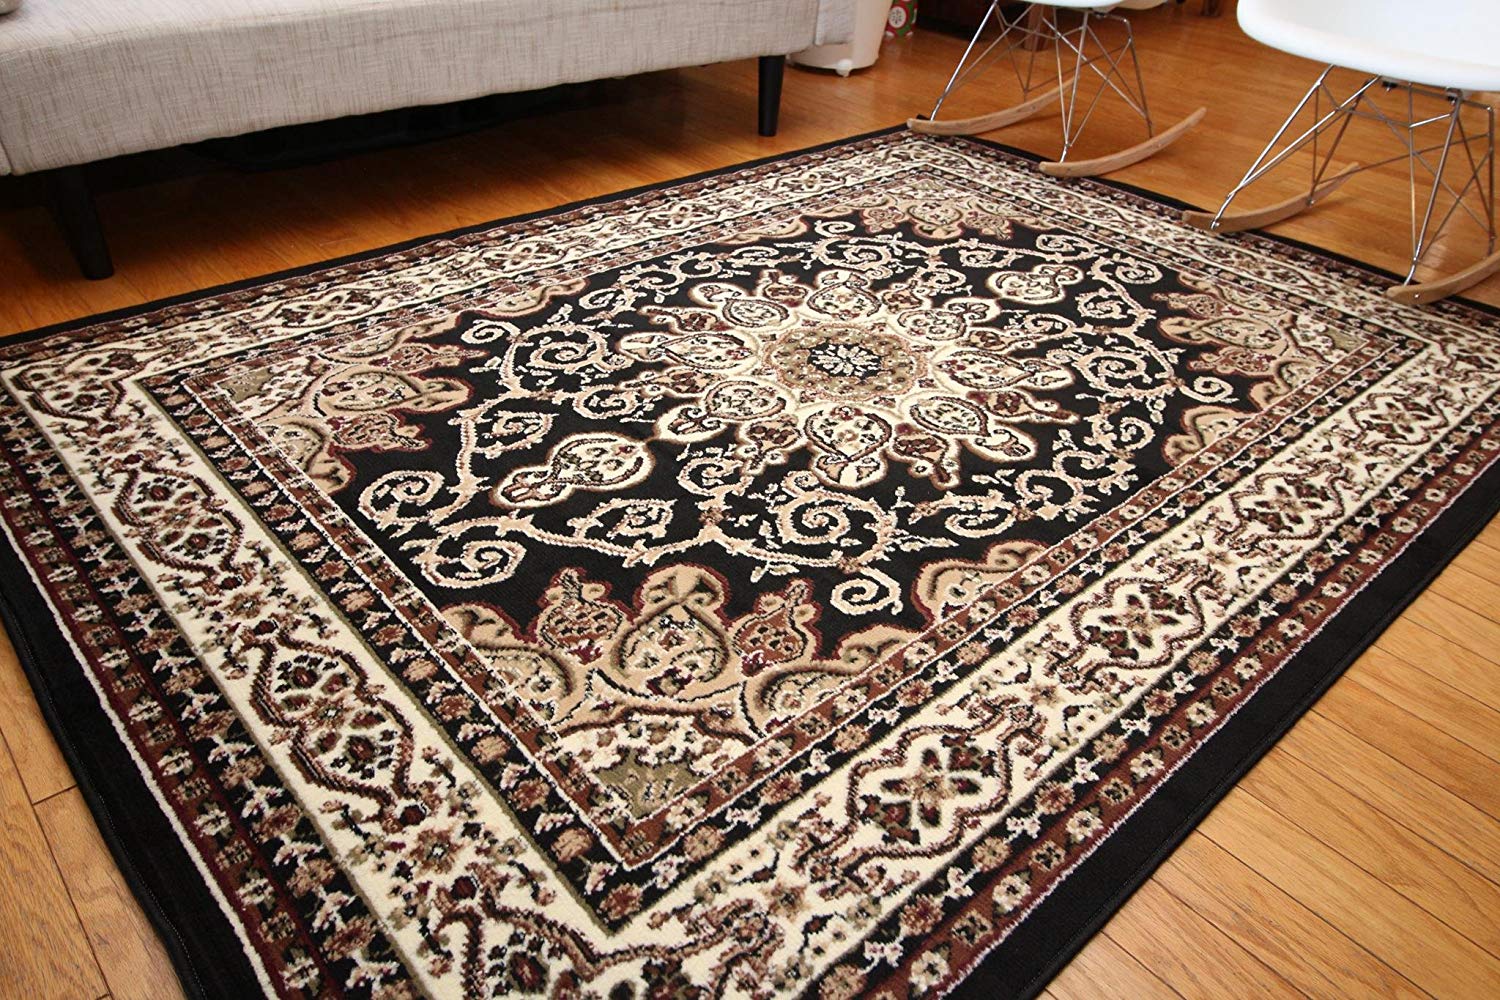 oriental area rugs amazon.com: generations new oriental traditional isfahan persian area rug,  8u0027 x 10.5u0027, PUHDLDN